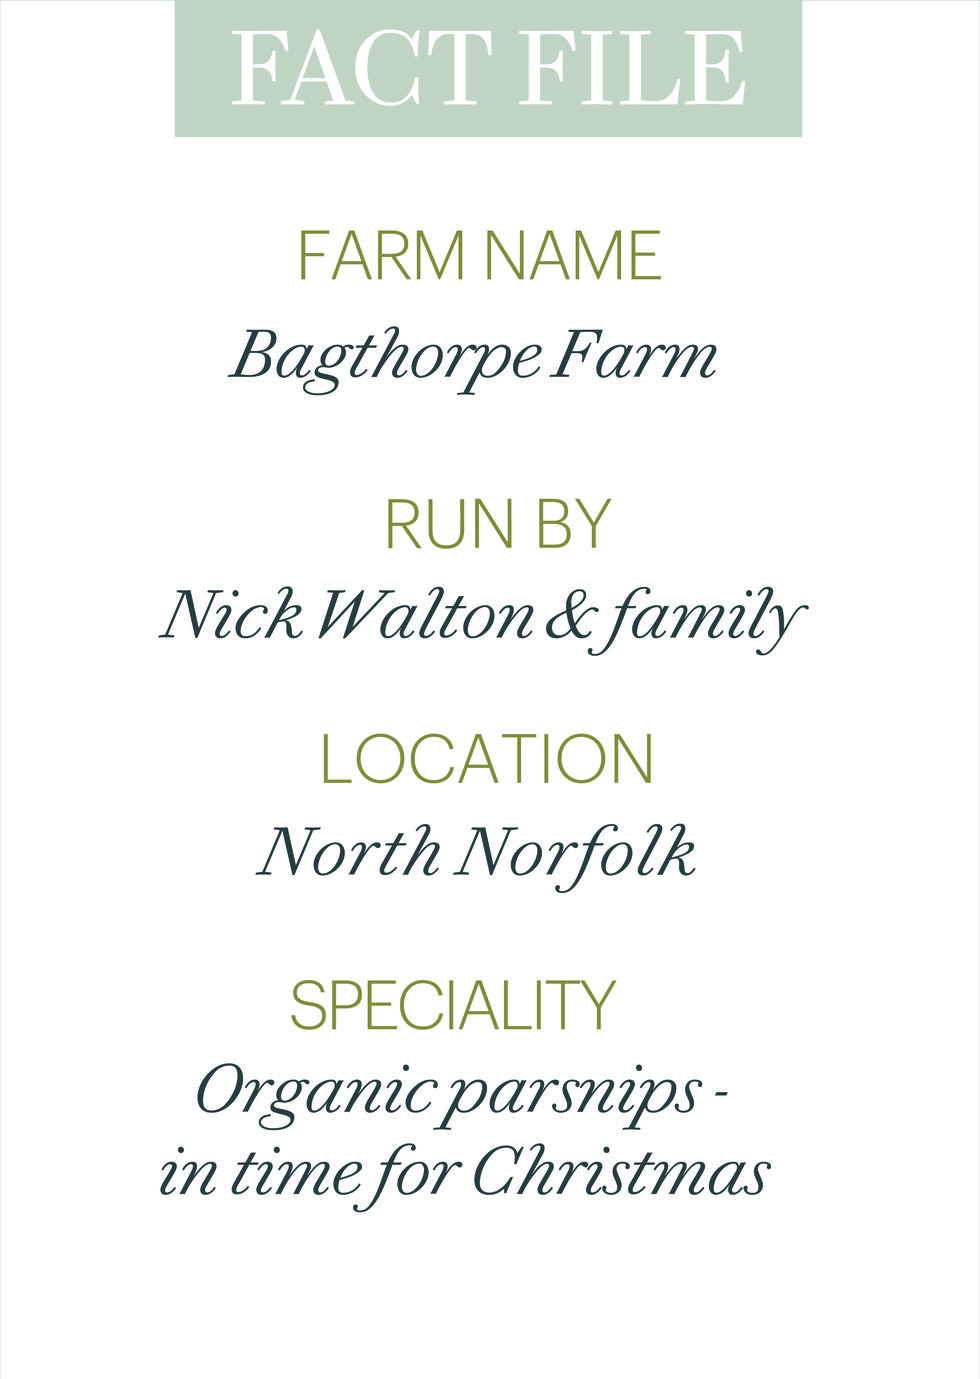 bagthorpe farm parsnips fact box